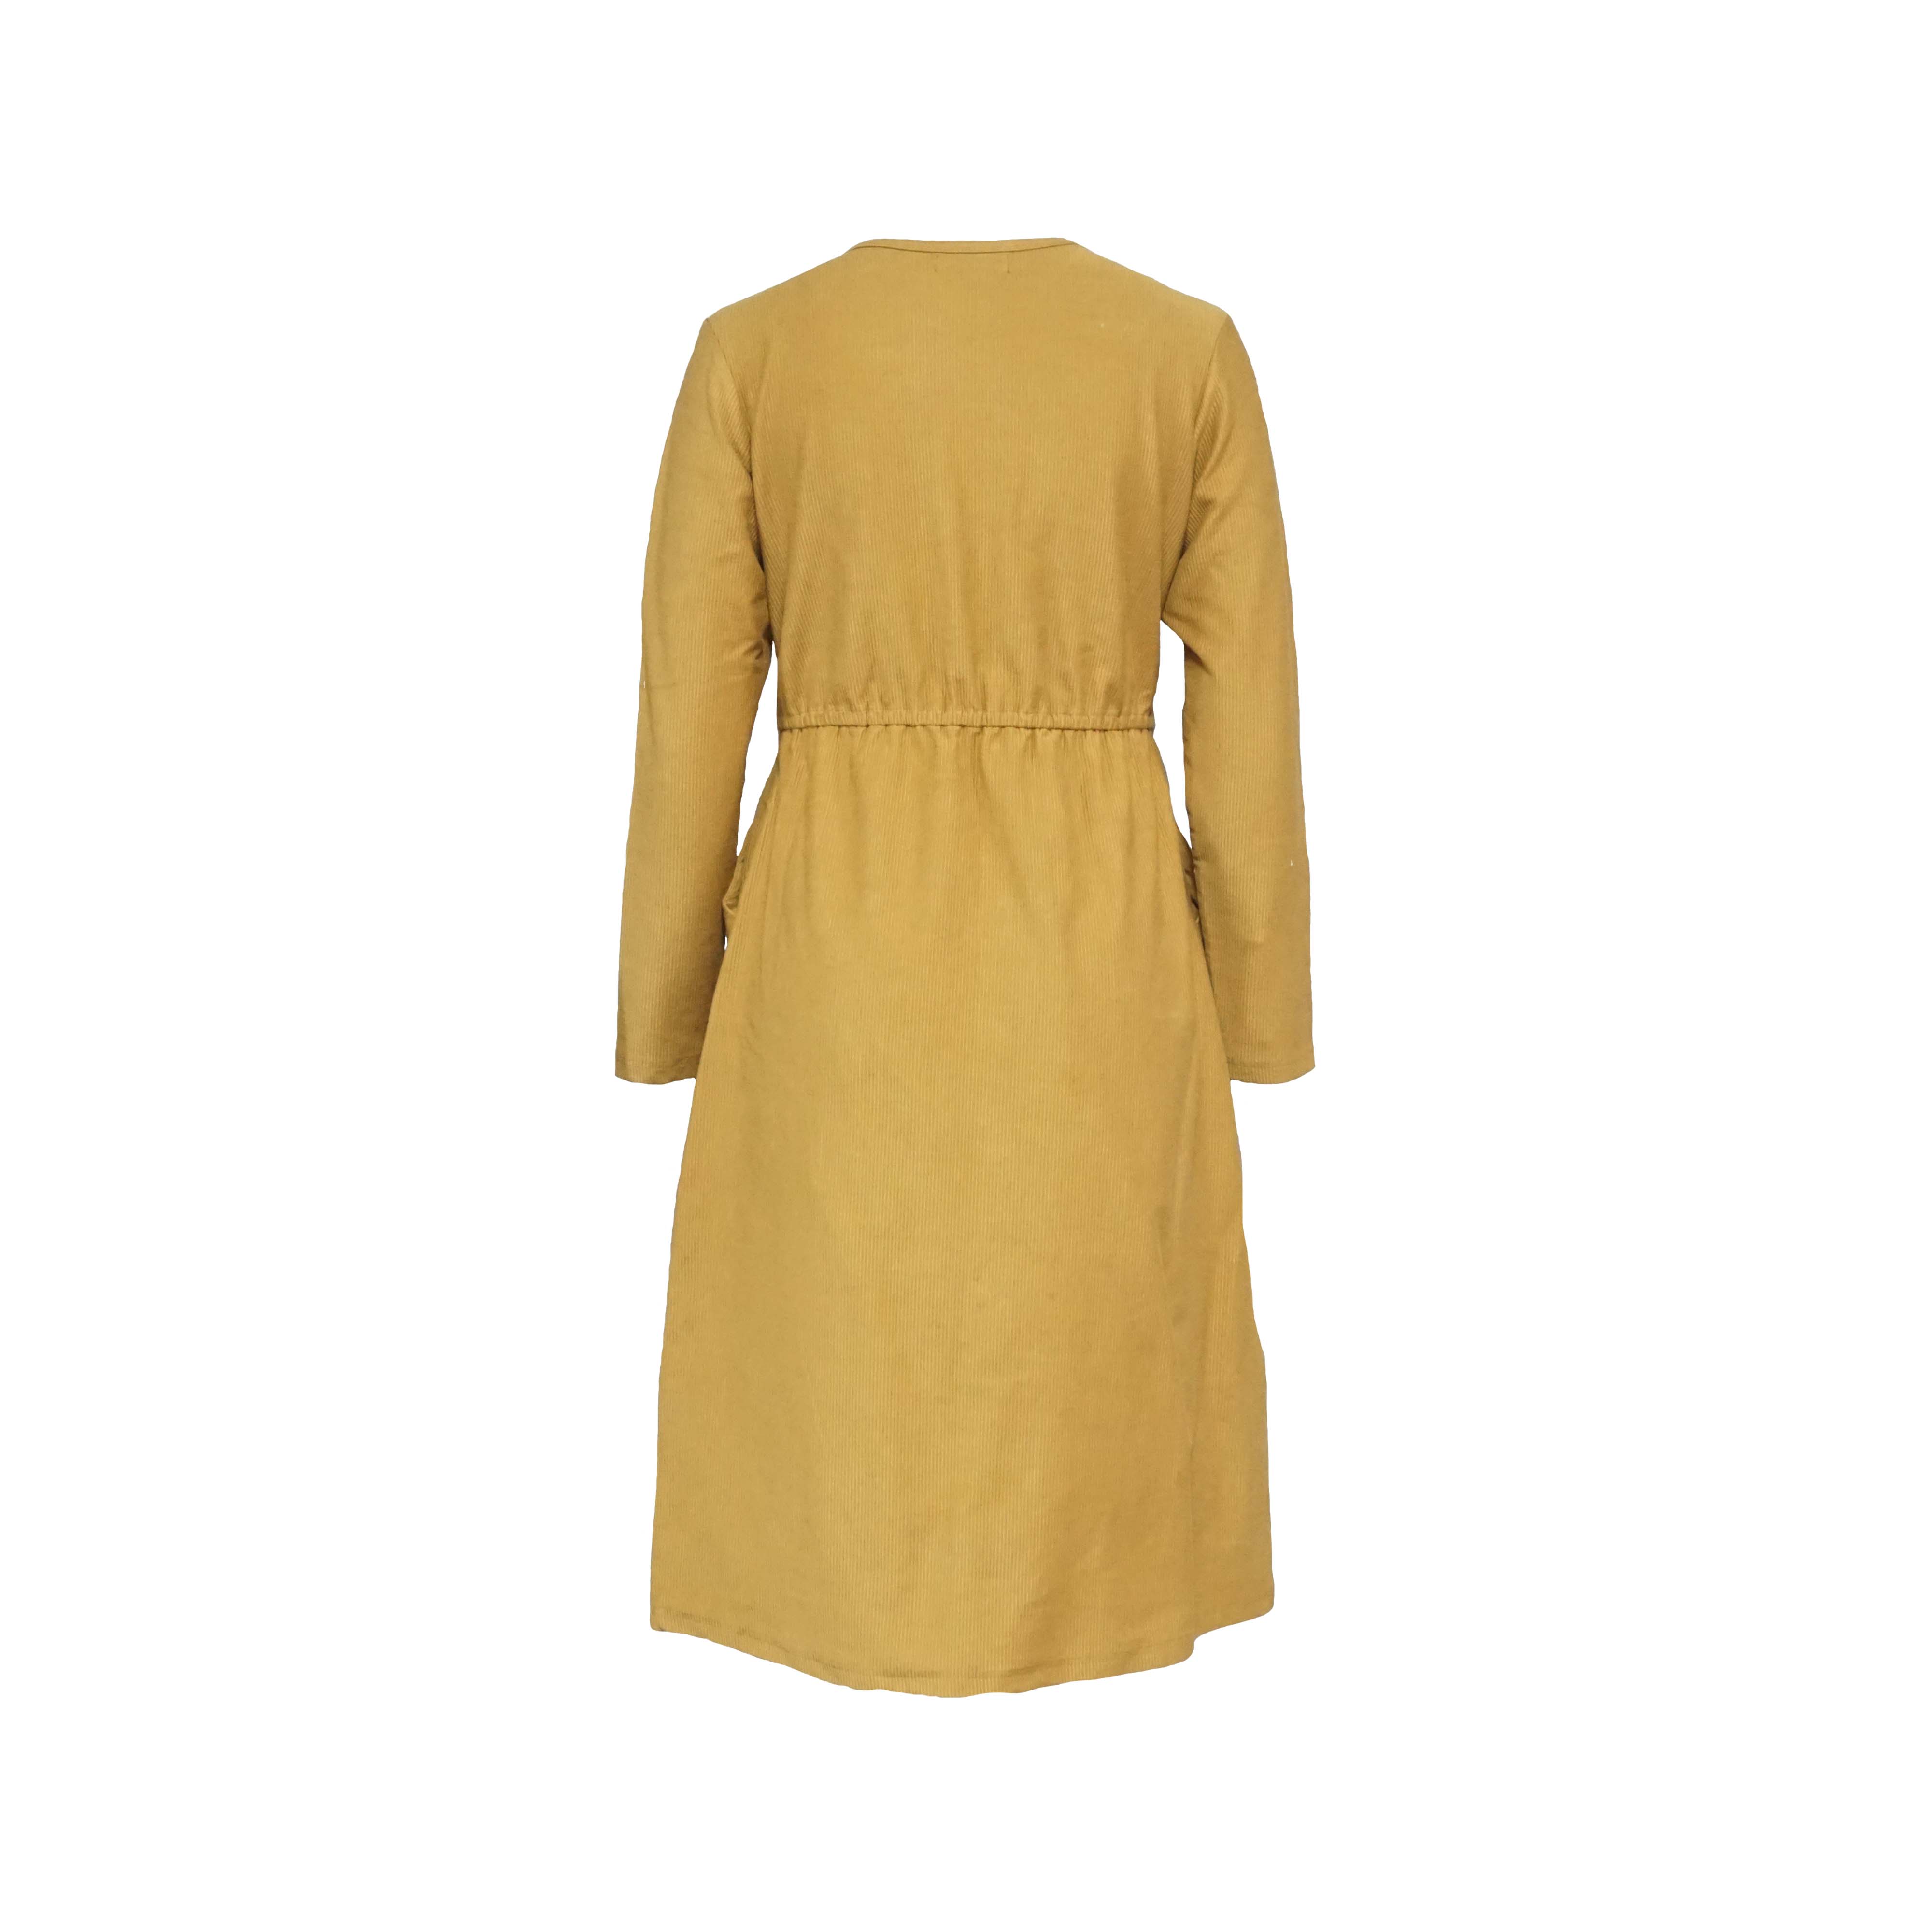 Brown yellow long-sleeves dress